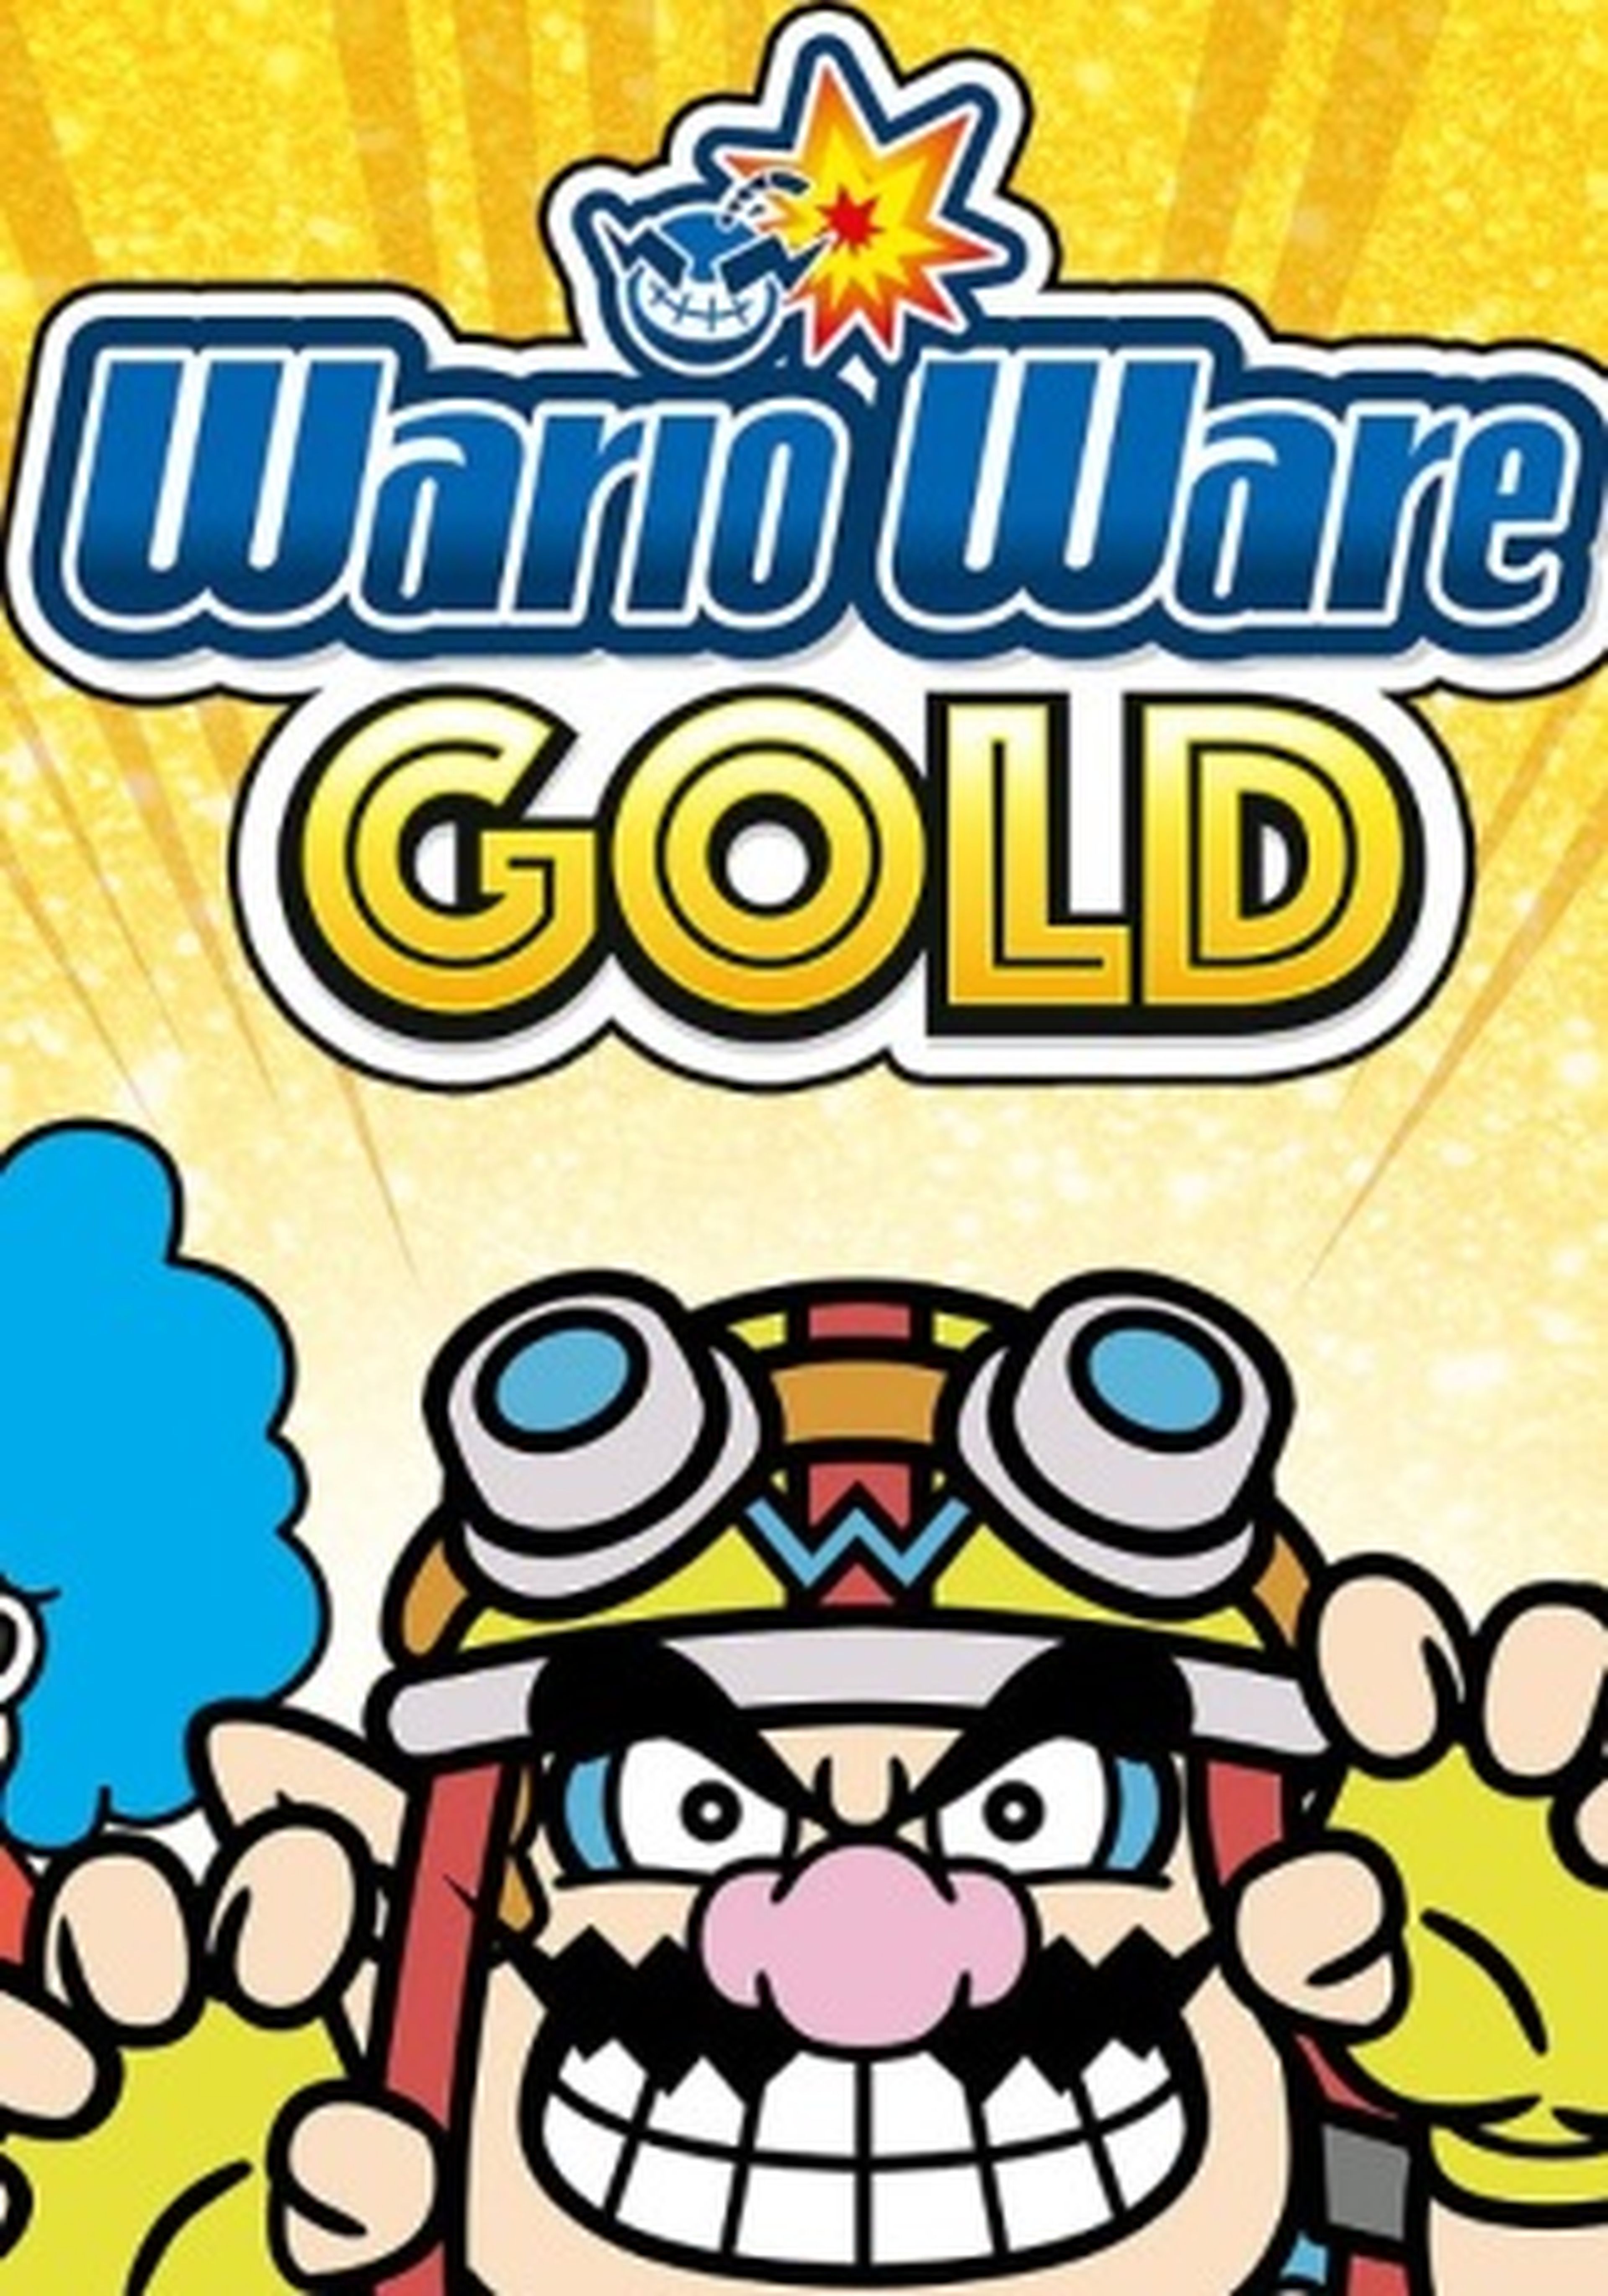 warioware gold portada